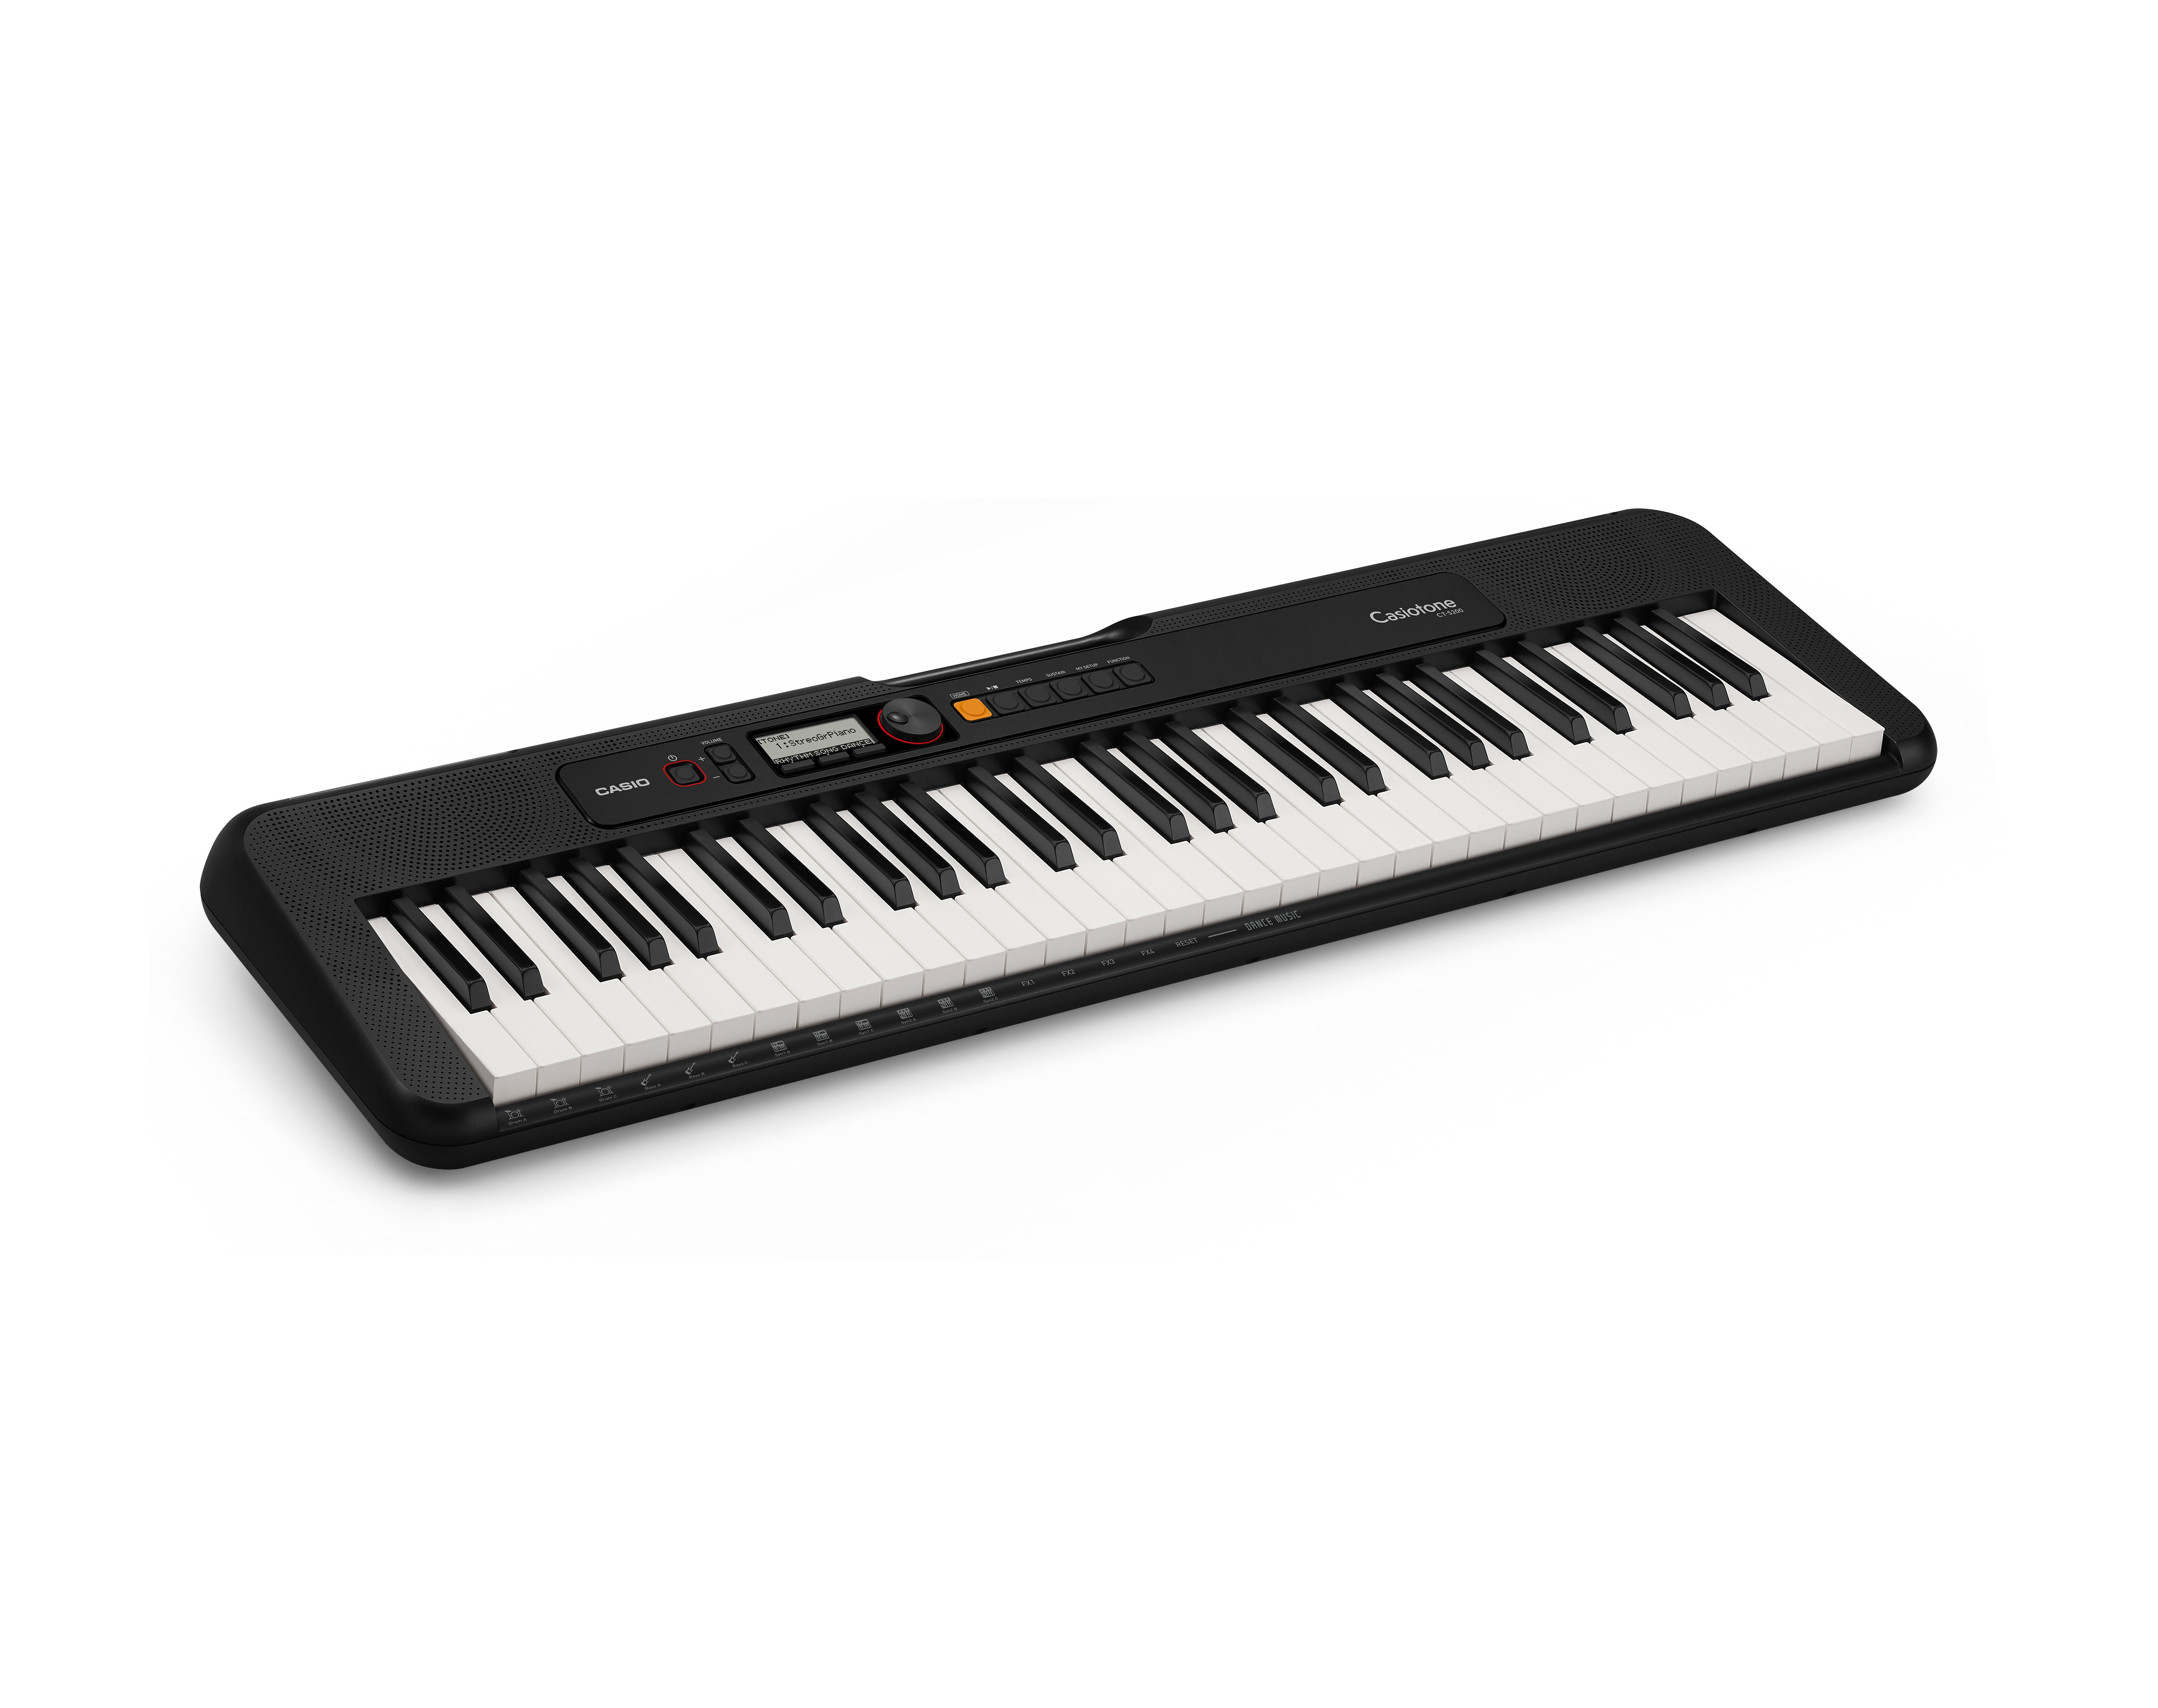 Casio CT-S200 61-Key Portable Keyboard